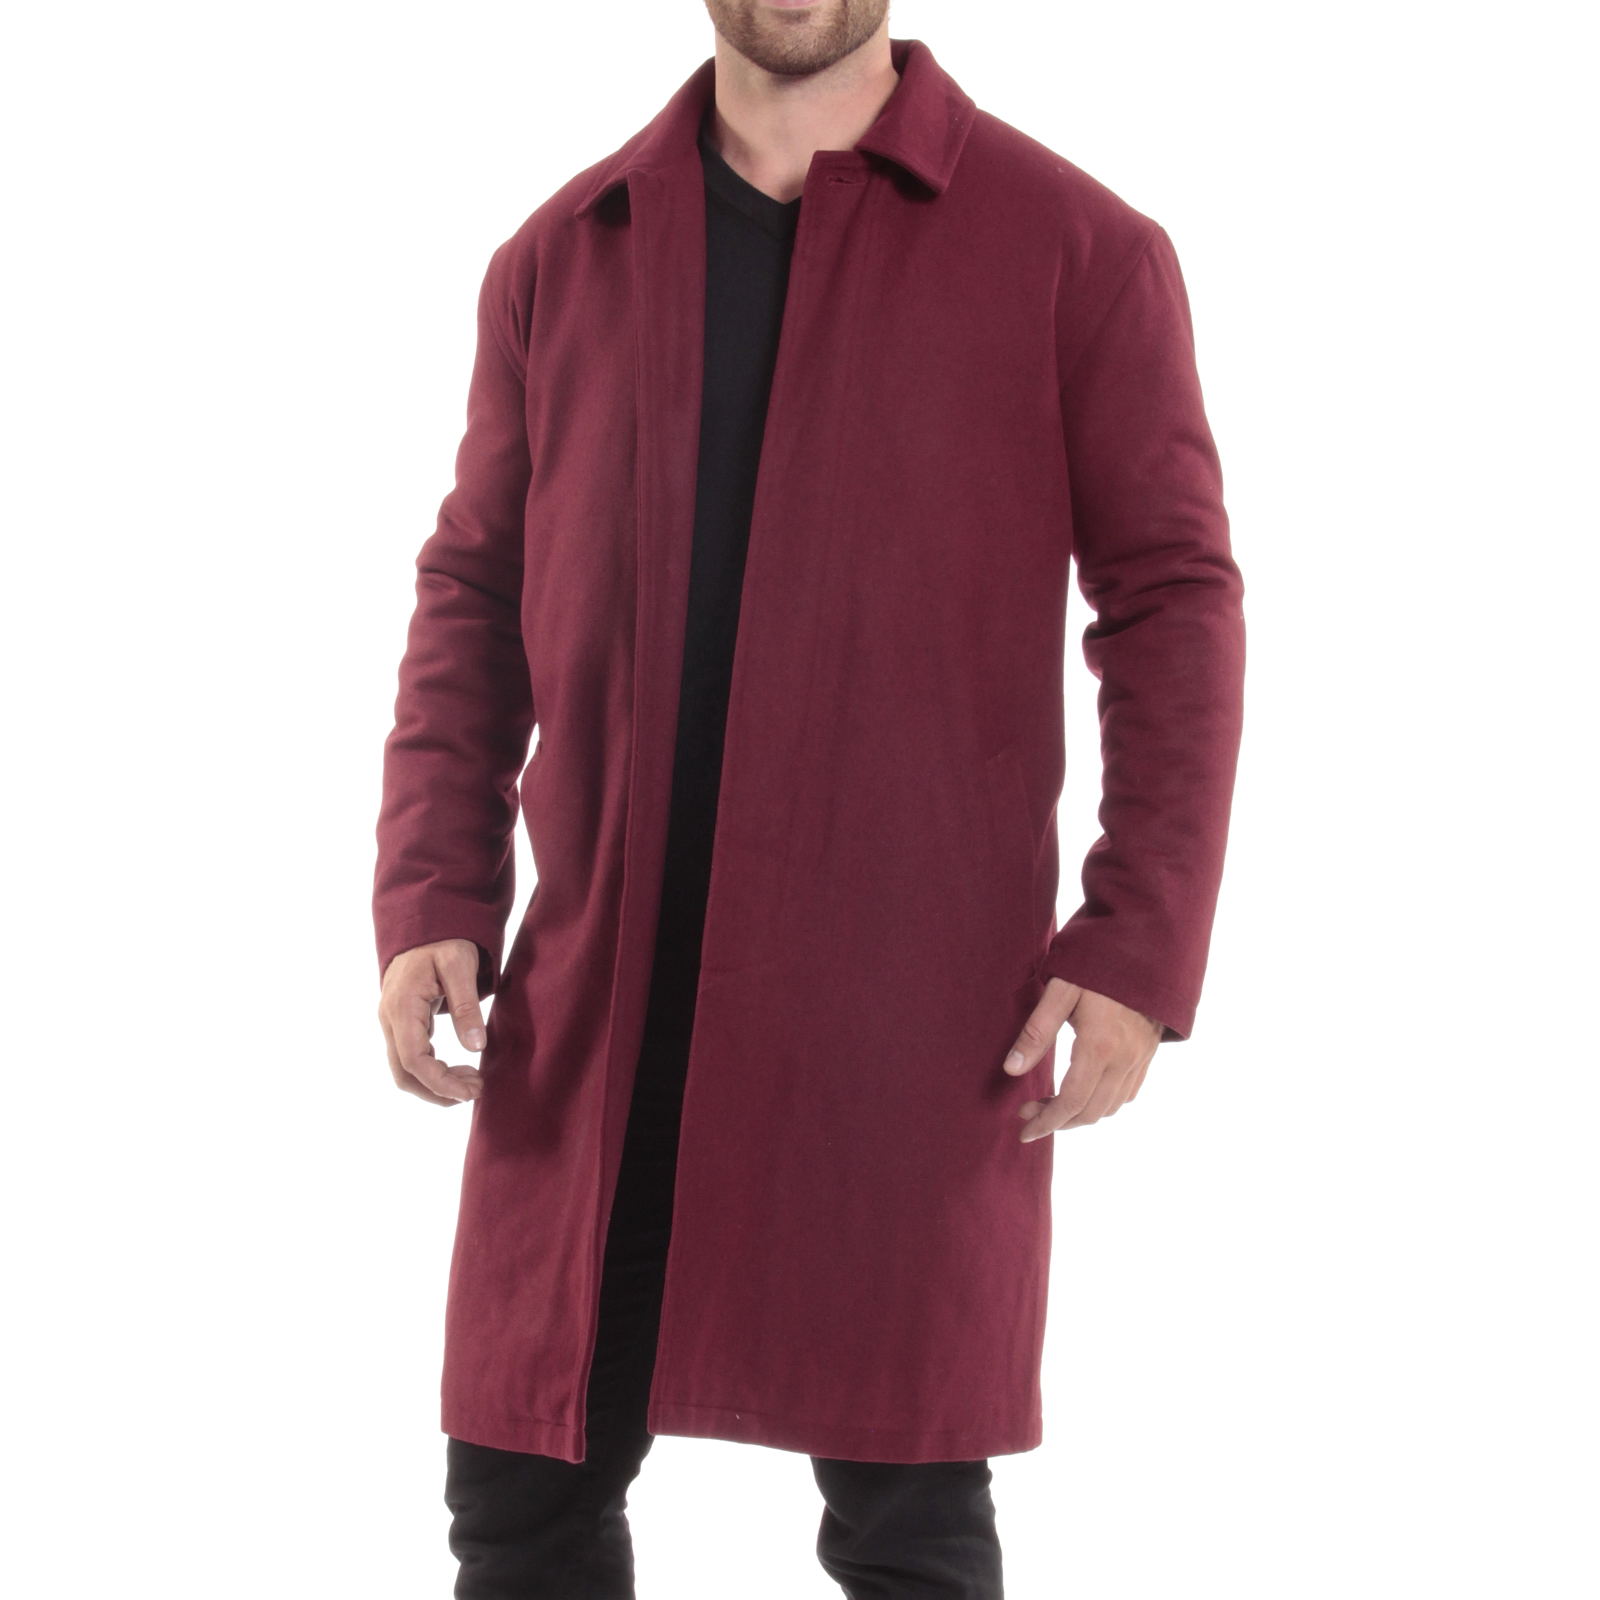 Alpine Swiss Mens Zach Knee Length Jacket Top Coat Trench Wool Blend Overcoat - image 5 of 7